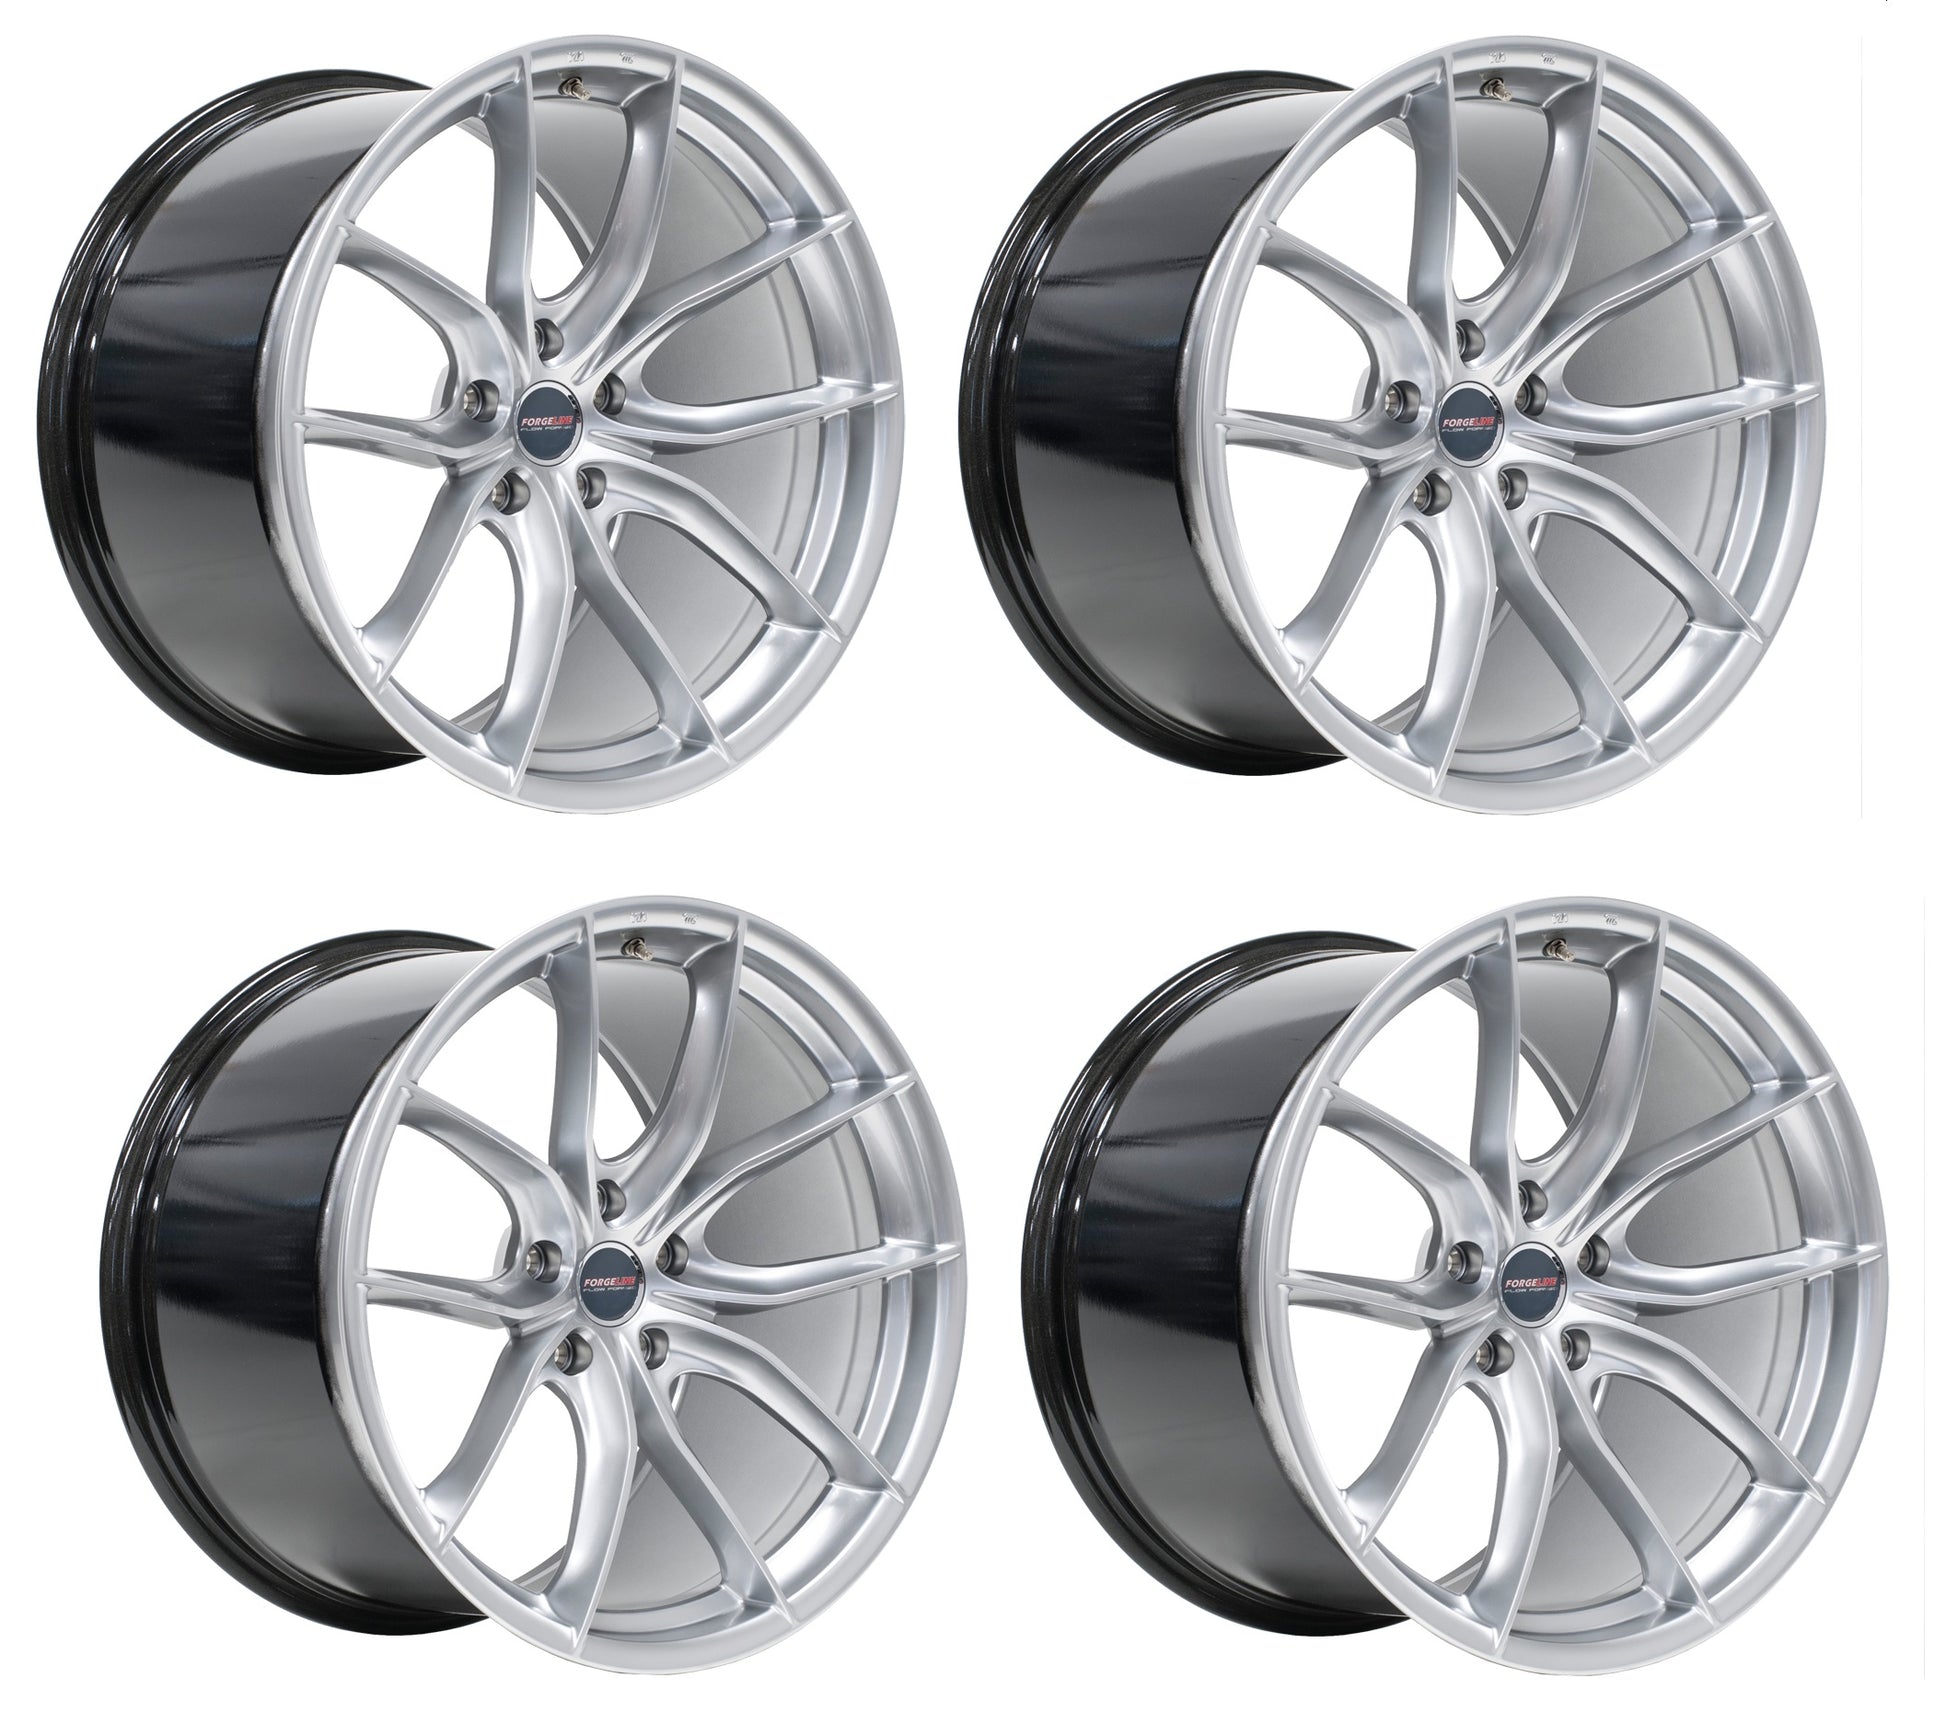 C8 Corvette Wheels: Forgeline F01 - Liquid Silver (Set)